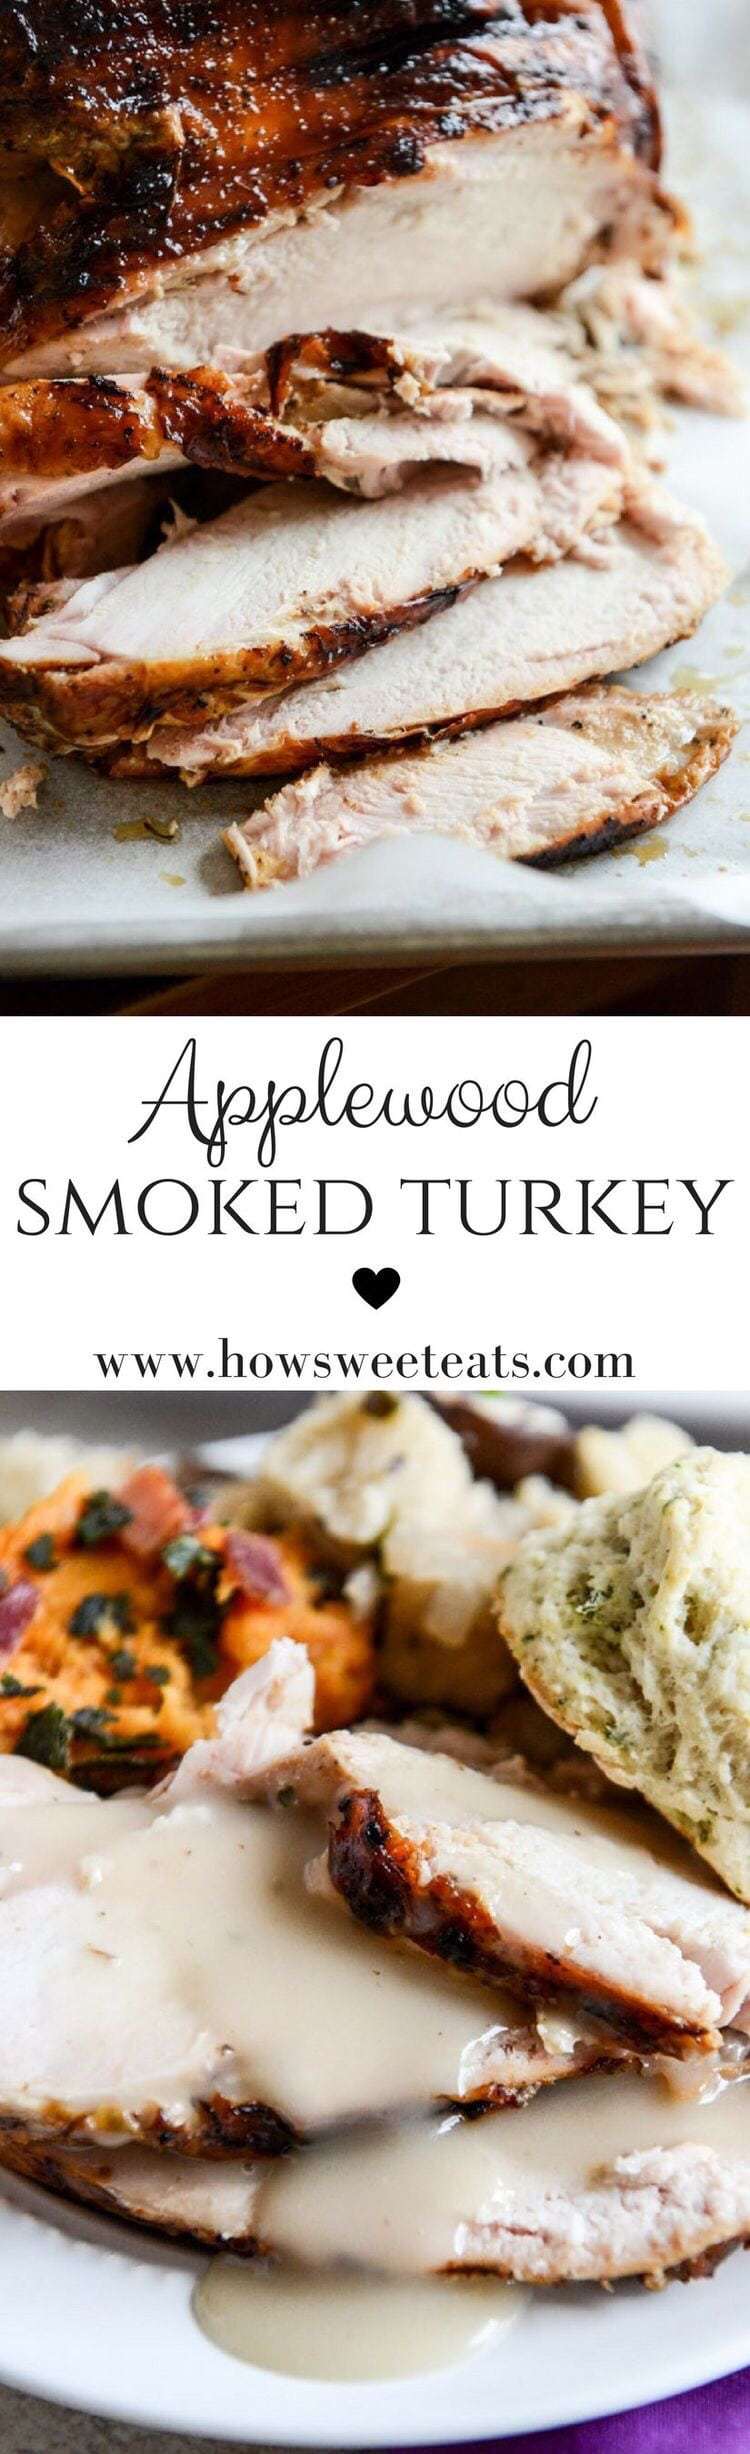 Thanksgiving turkey recipes: Applewood Smoked Turkey With Cider Bourbon Gravy